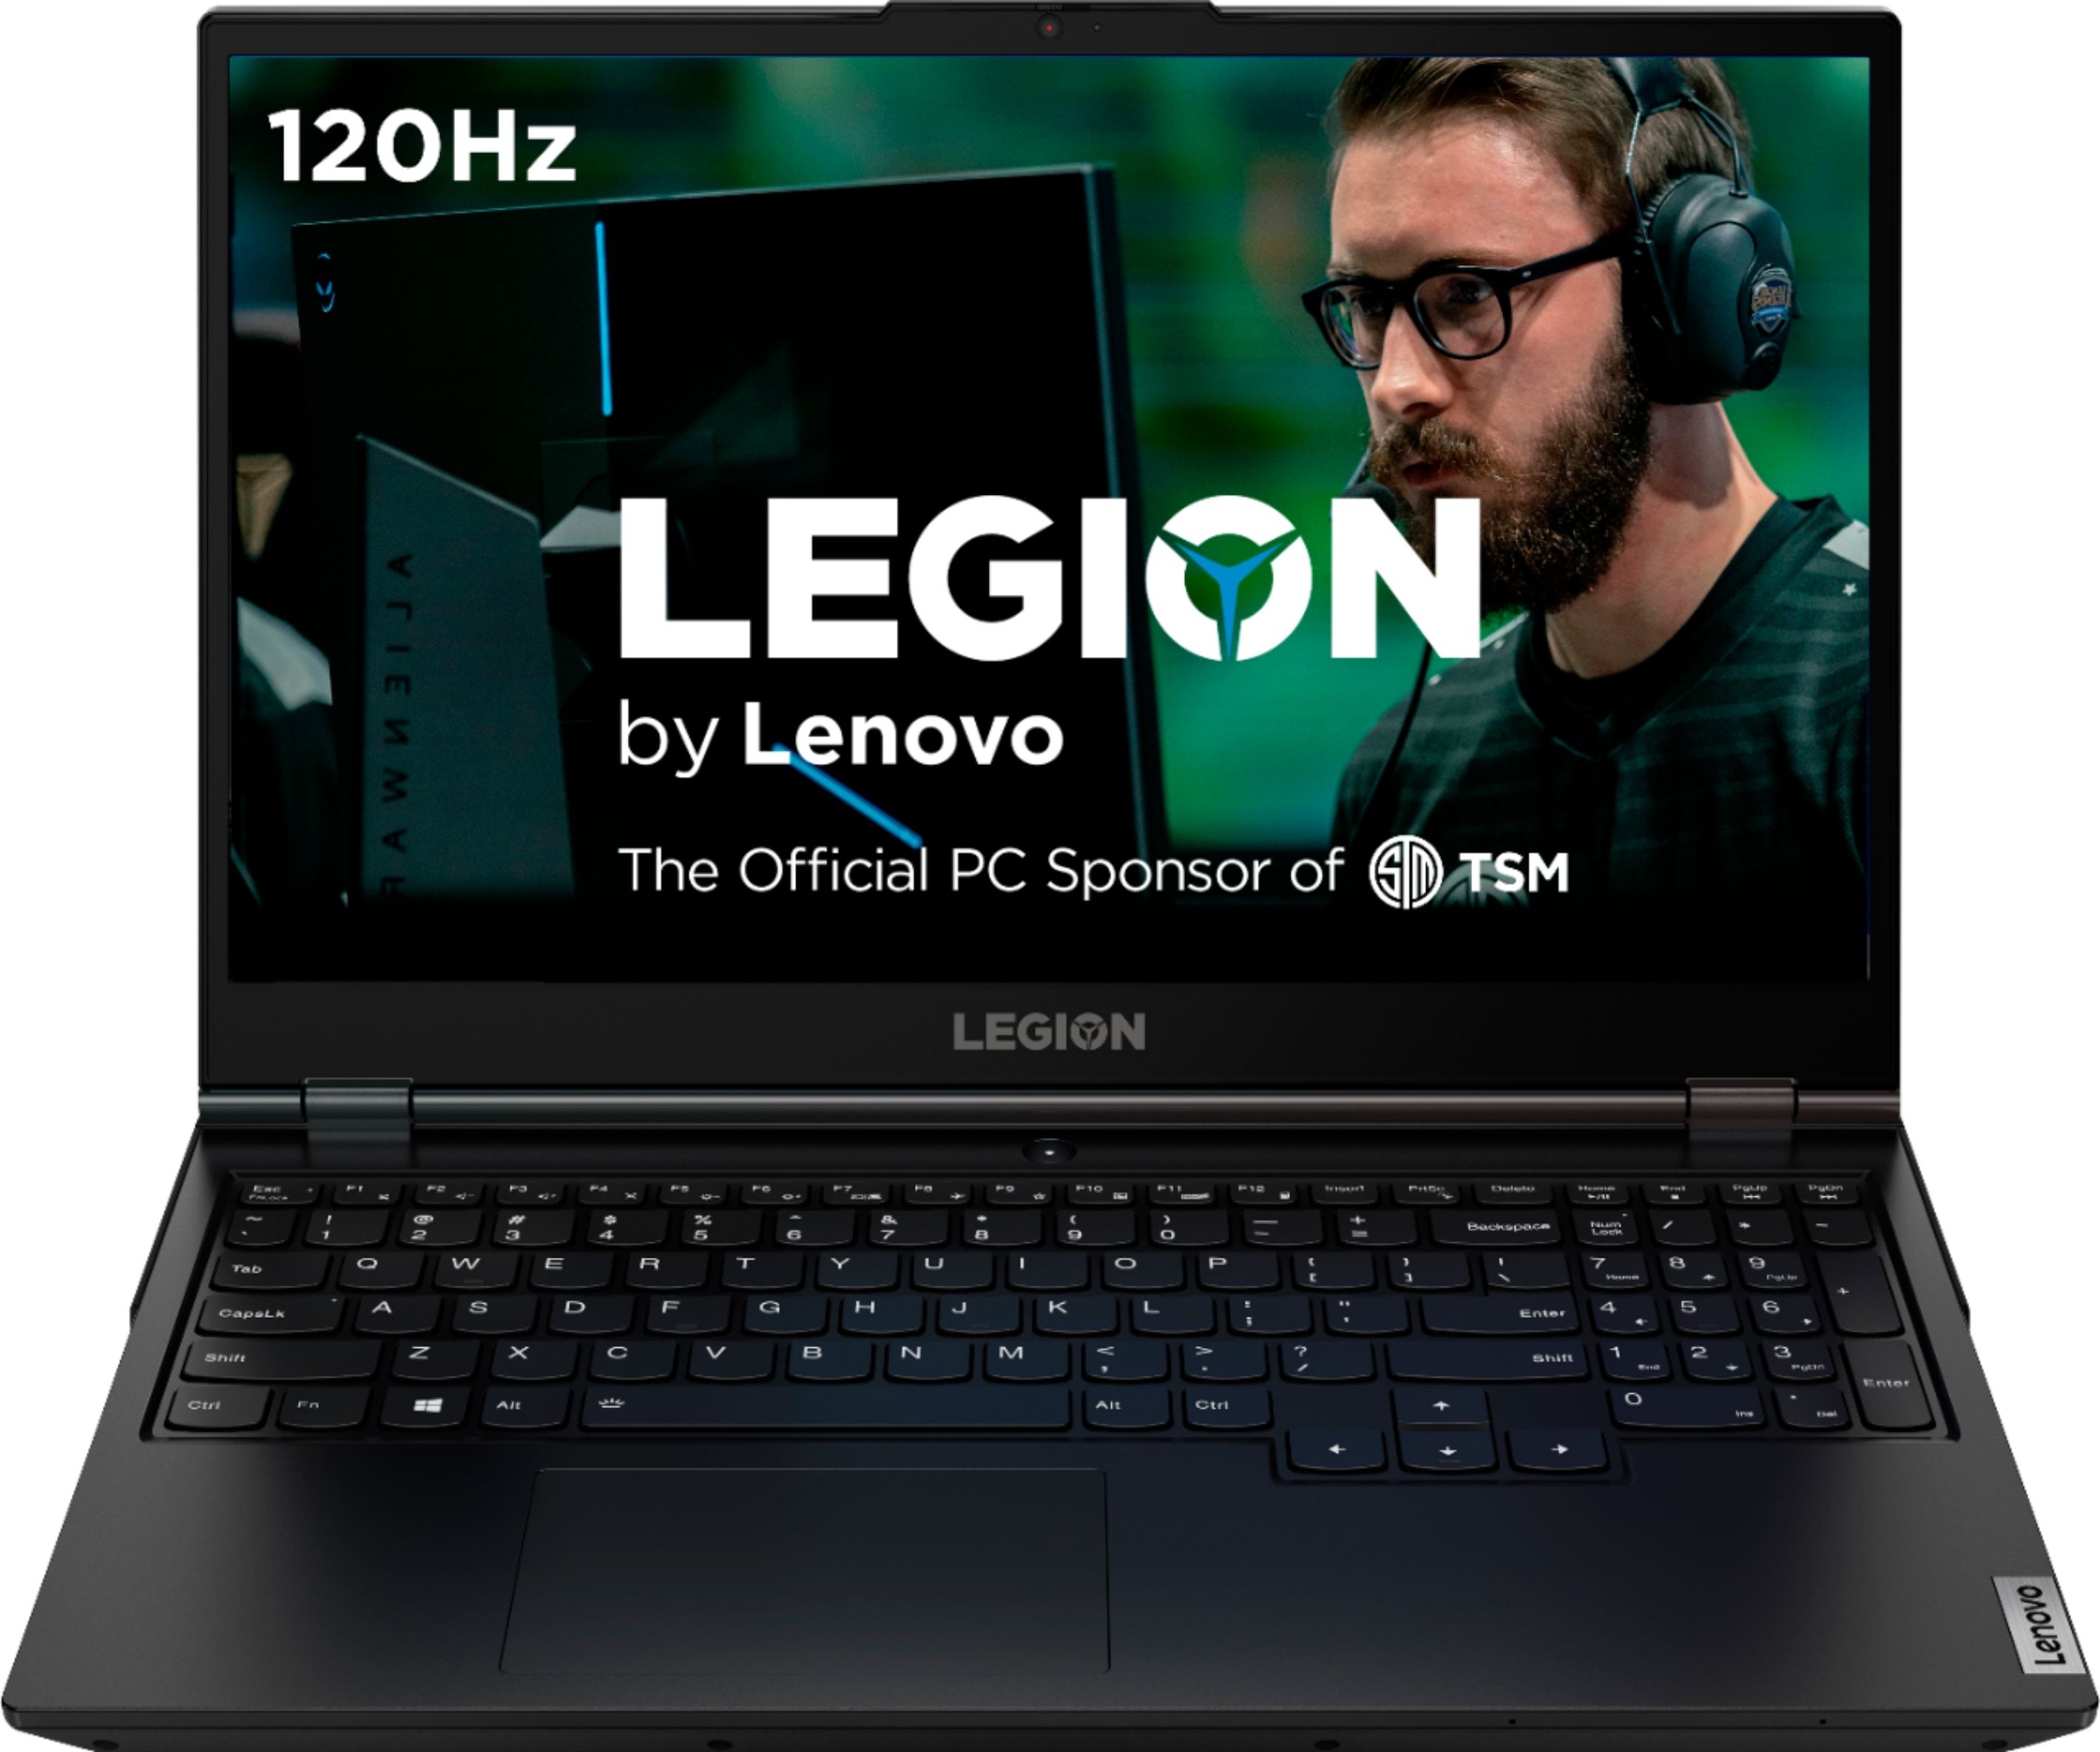 Lenovo Legion G5 15” Gaming Laptop, i7 10750h, 1660 TI 6gb, 8GB RAM, 512GB PCIe NVMe SSD, 1080P 120 hz $899.99 at Best Buy